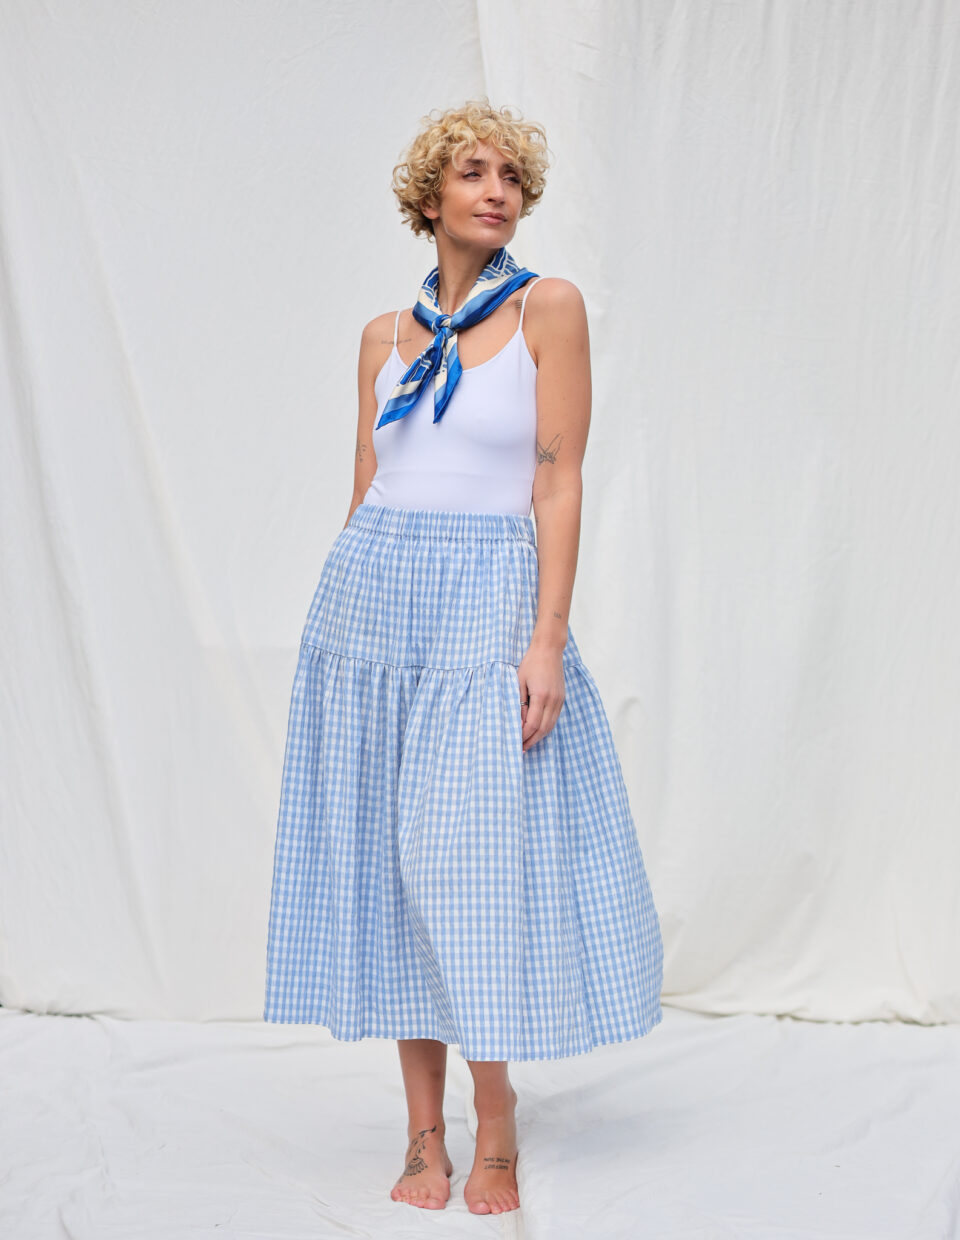 Elasticated waist airy skirt in light blue seersucker checks | Dress | Sustainable clothing | OffOn clothing